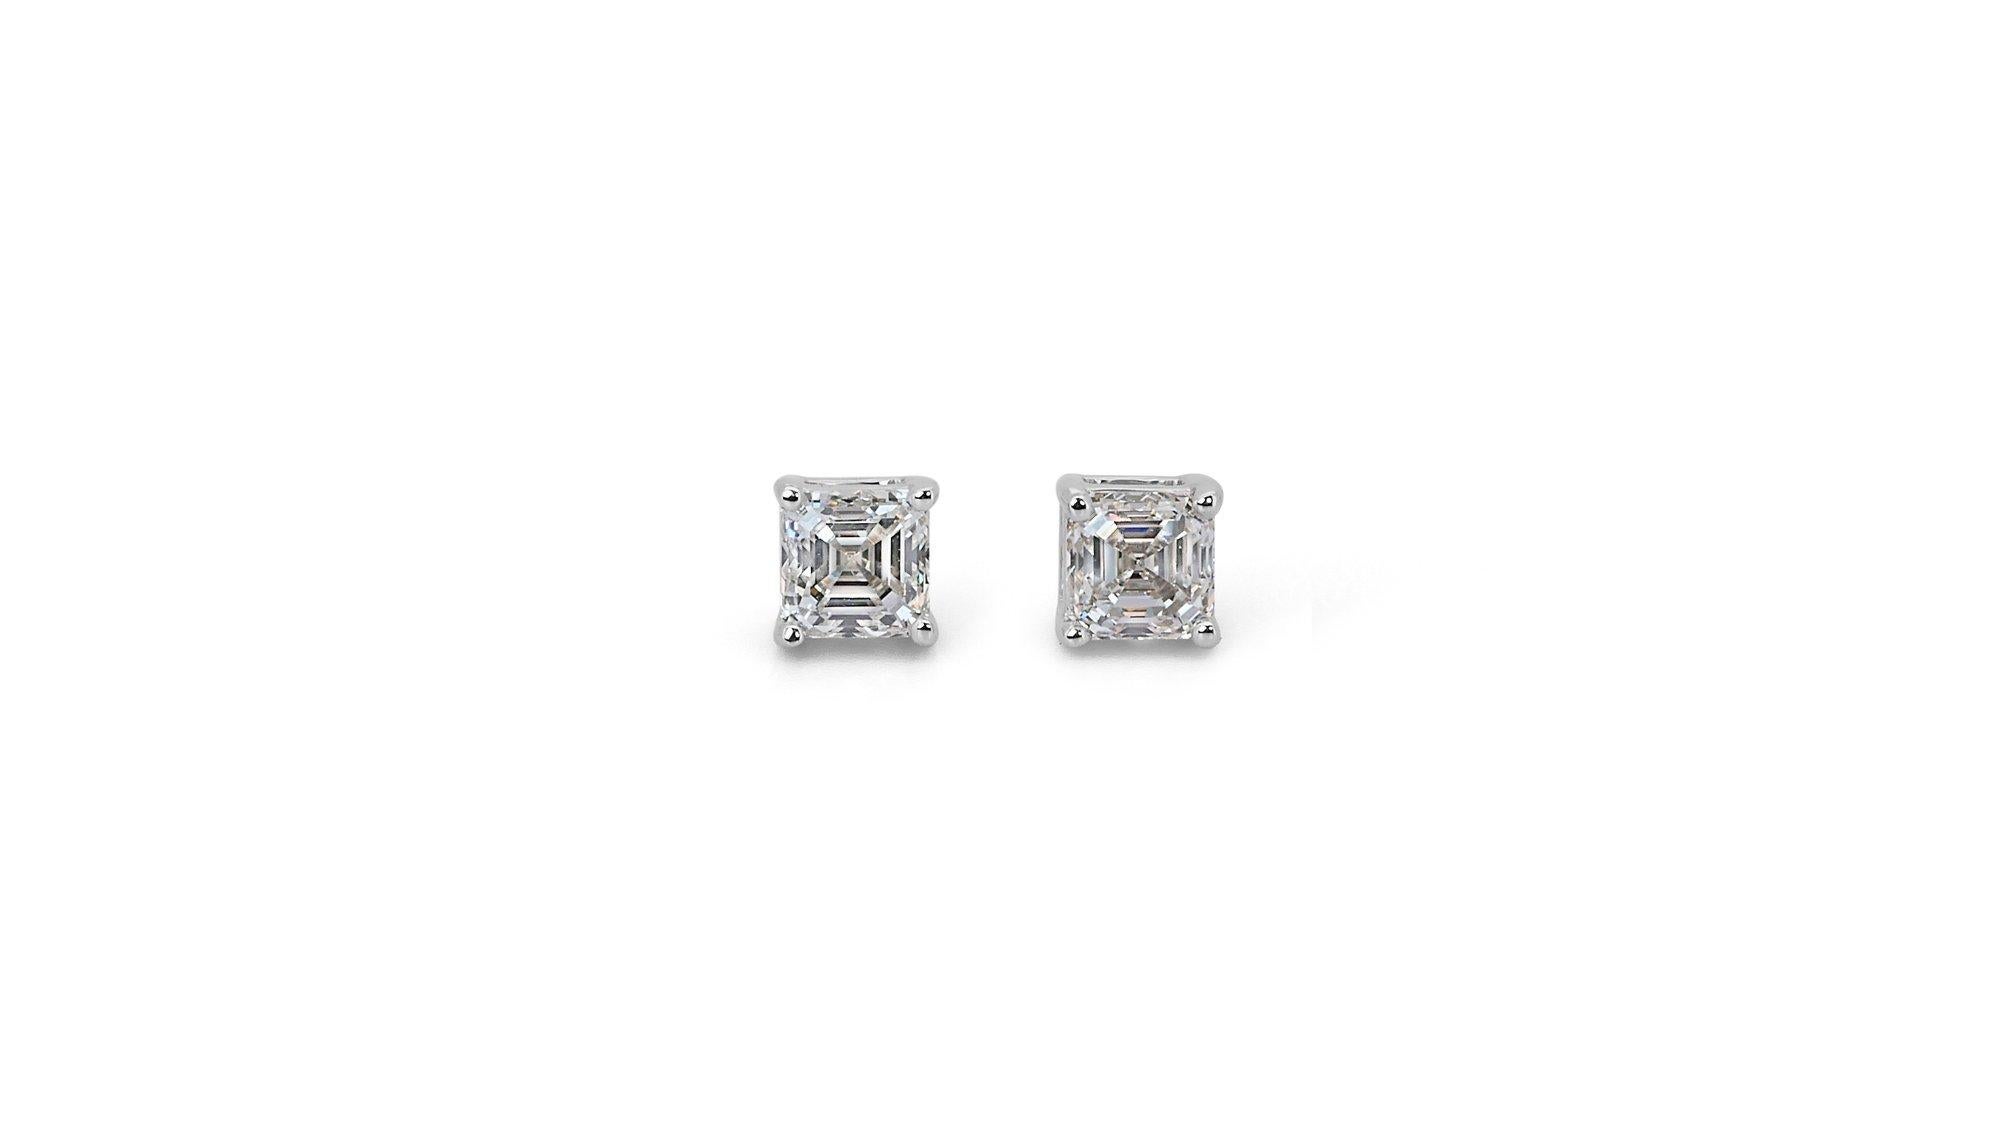 Women's Beautiful pair of stud earrings with a dazzling 1.3 carat Asscher cut diamonds